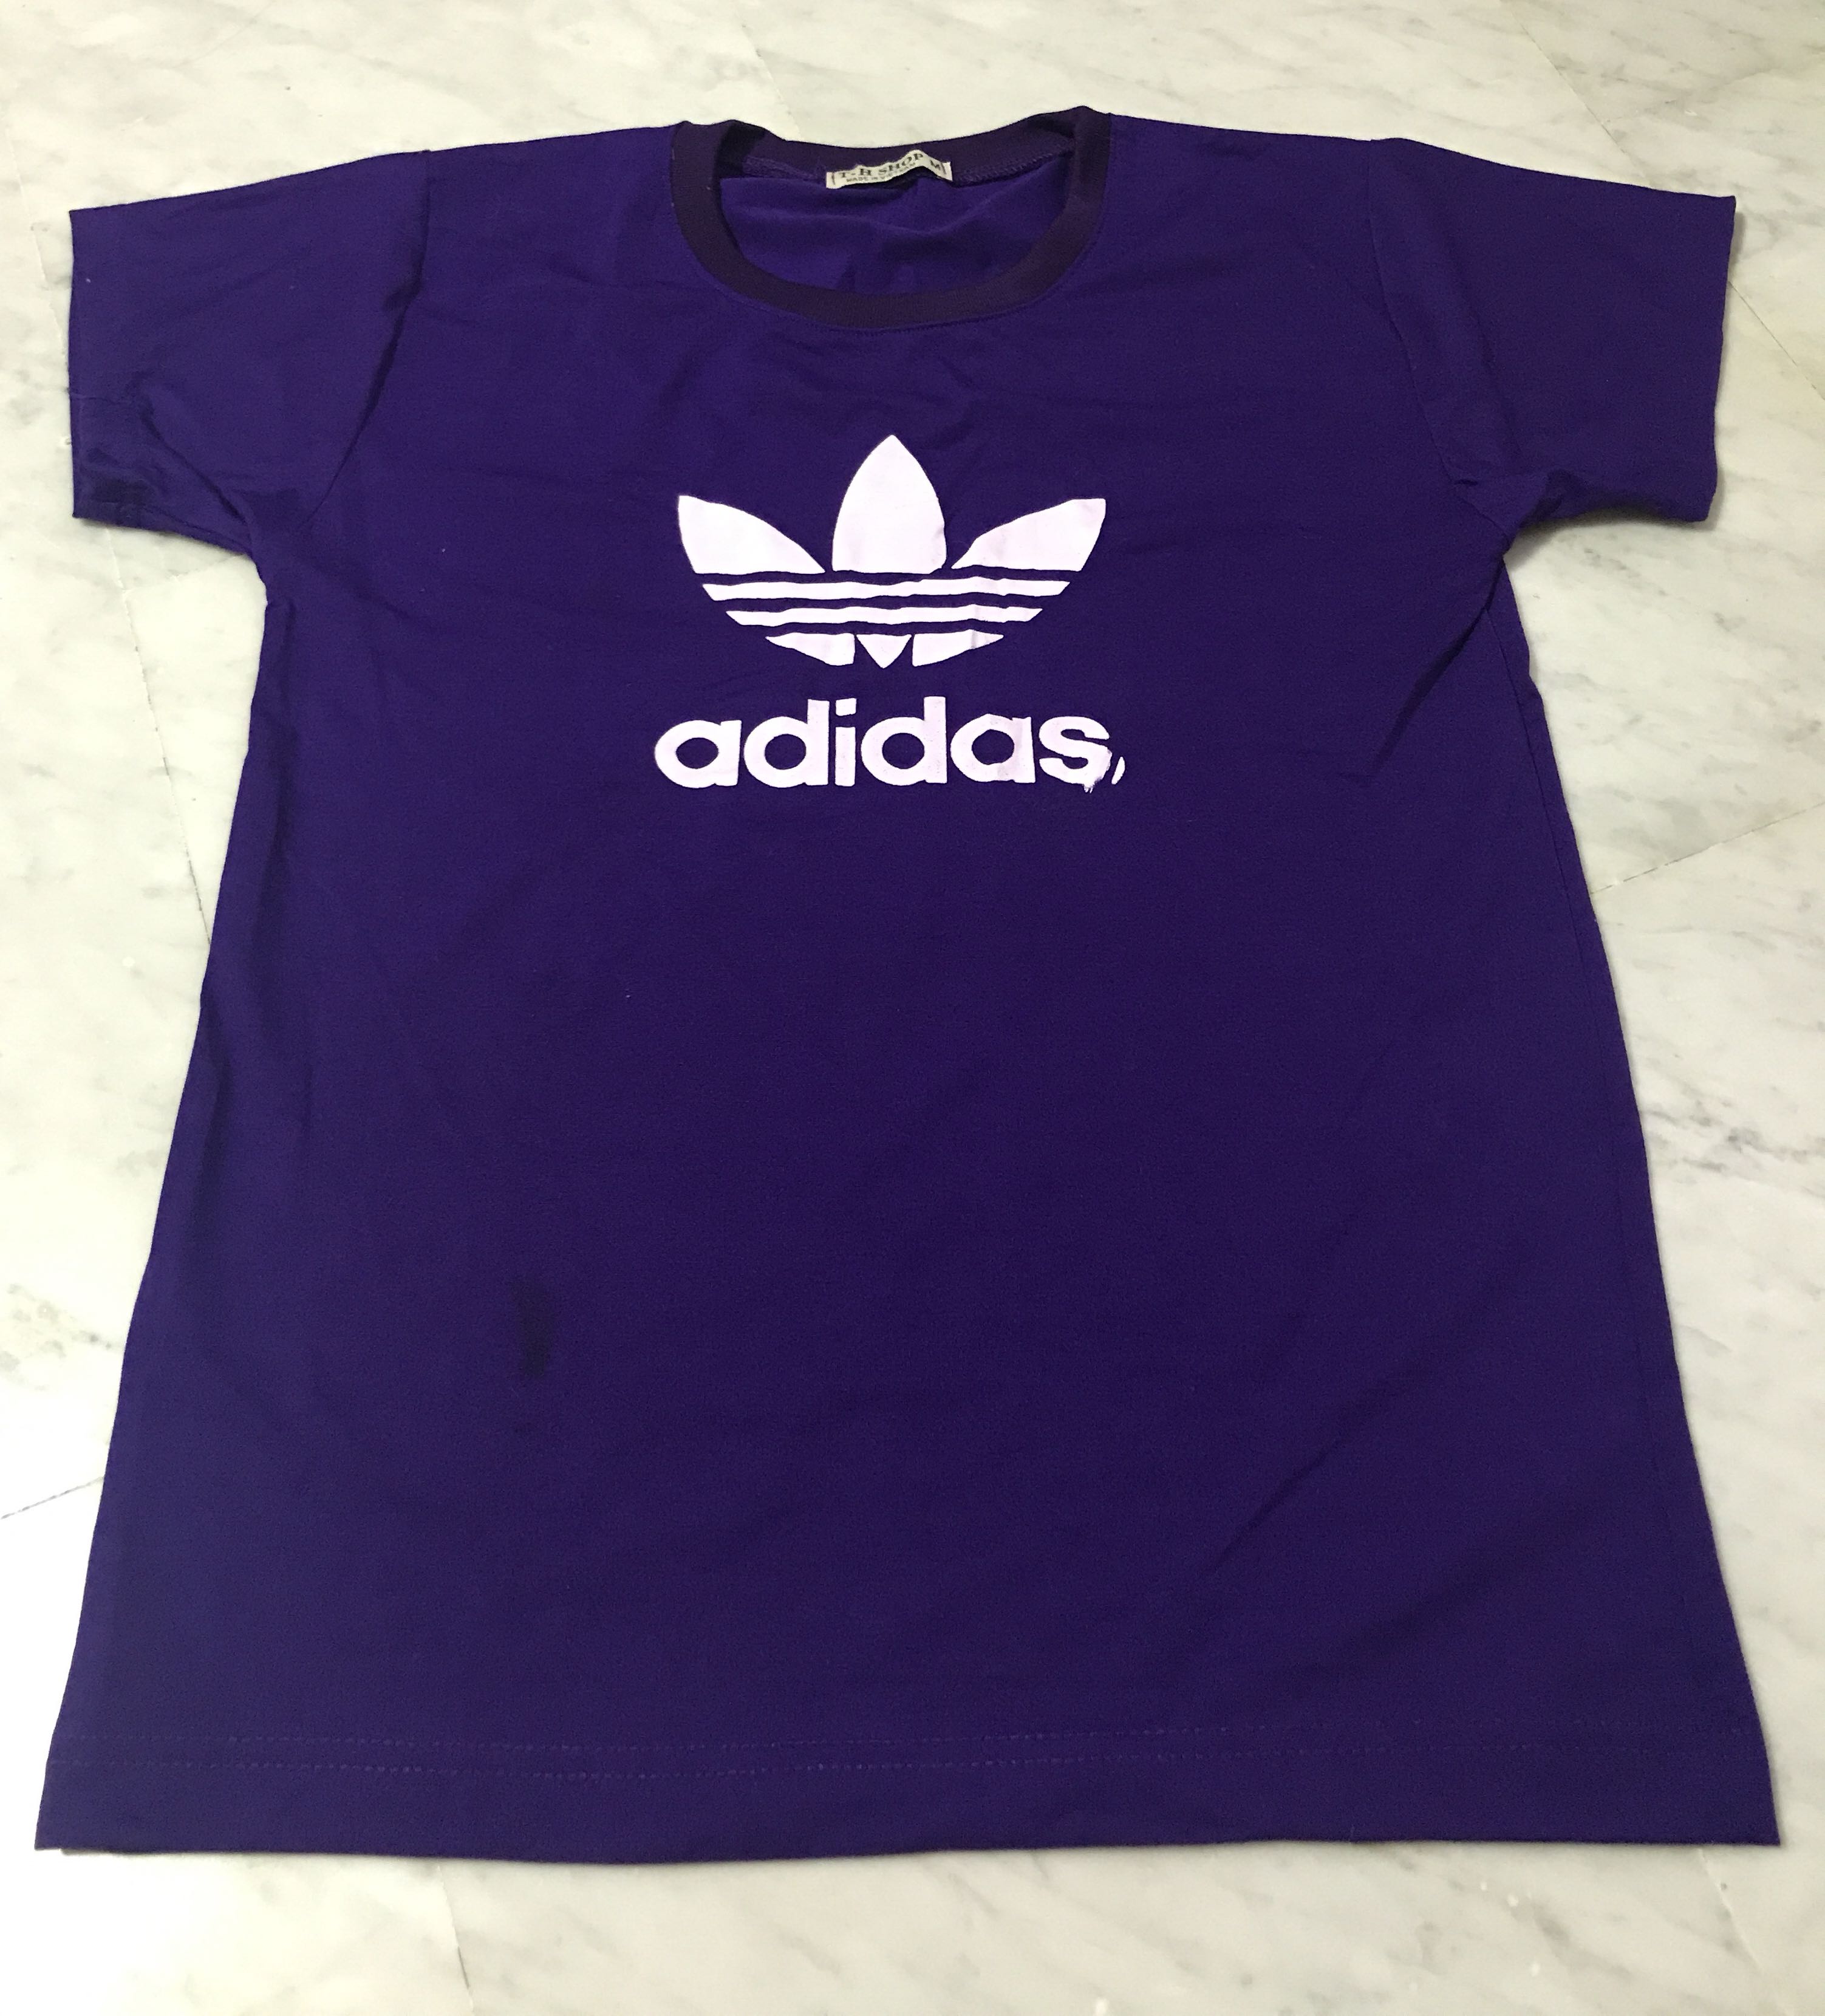 adidas purple shirt